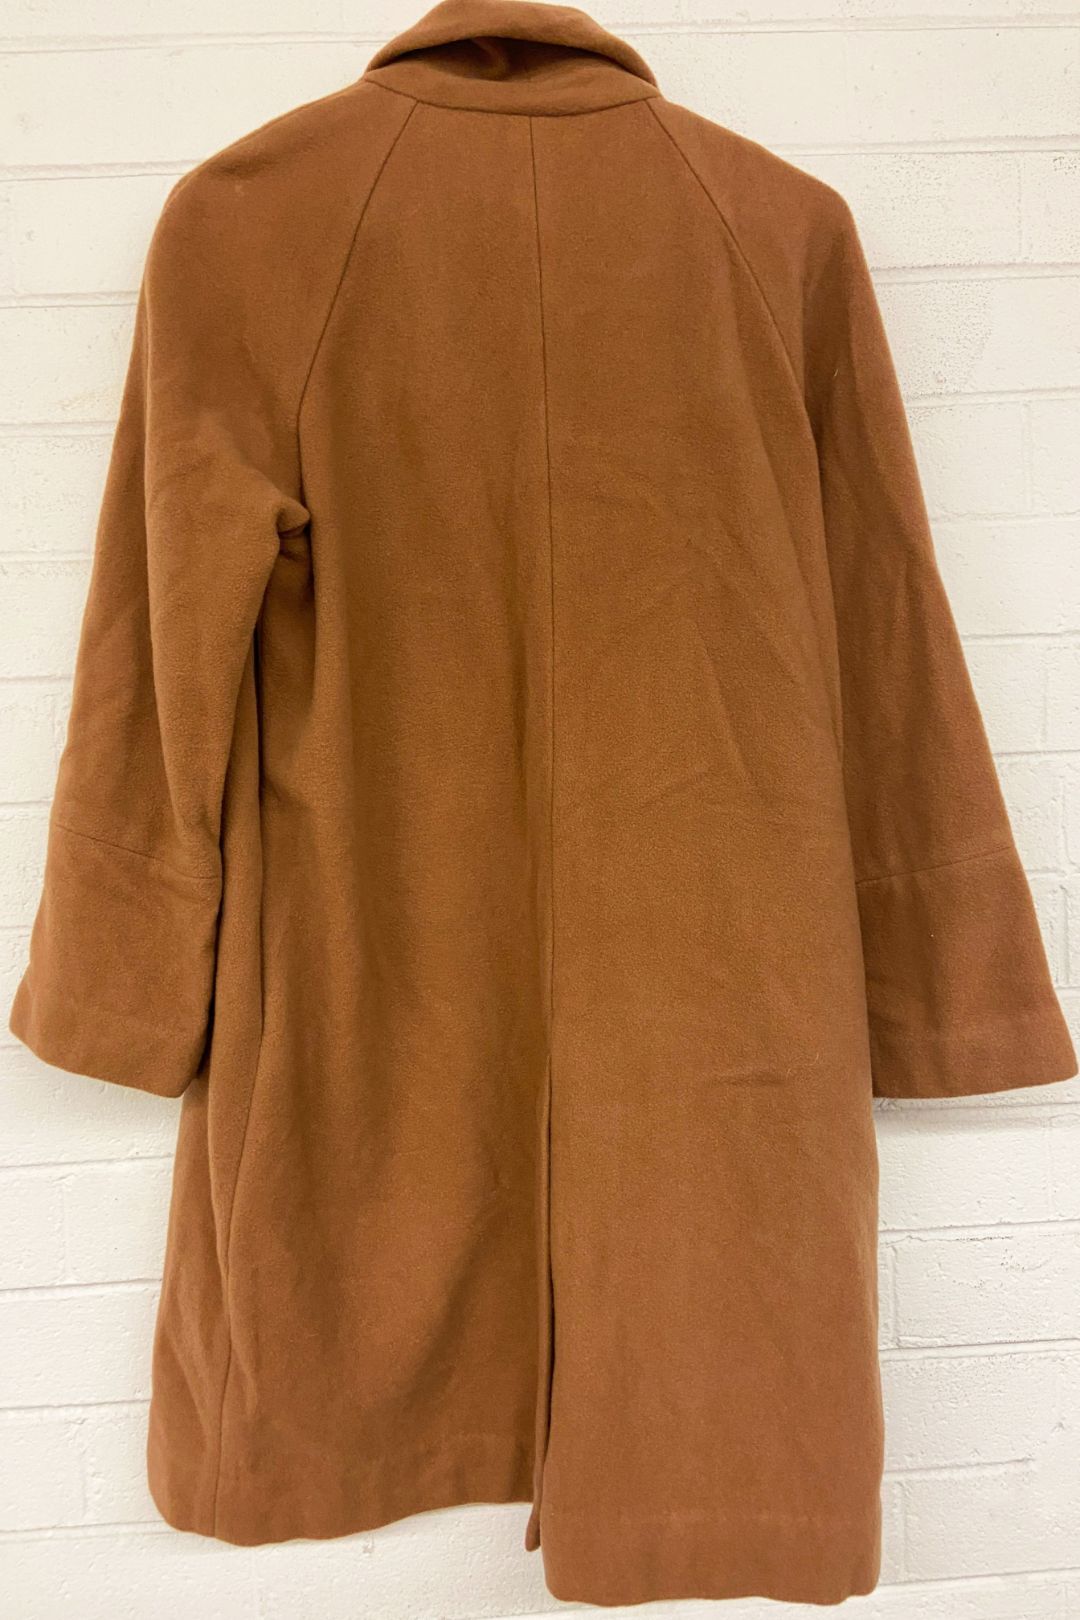 Lee Mathews Cashmere Blend Coat in Brown